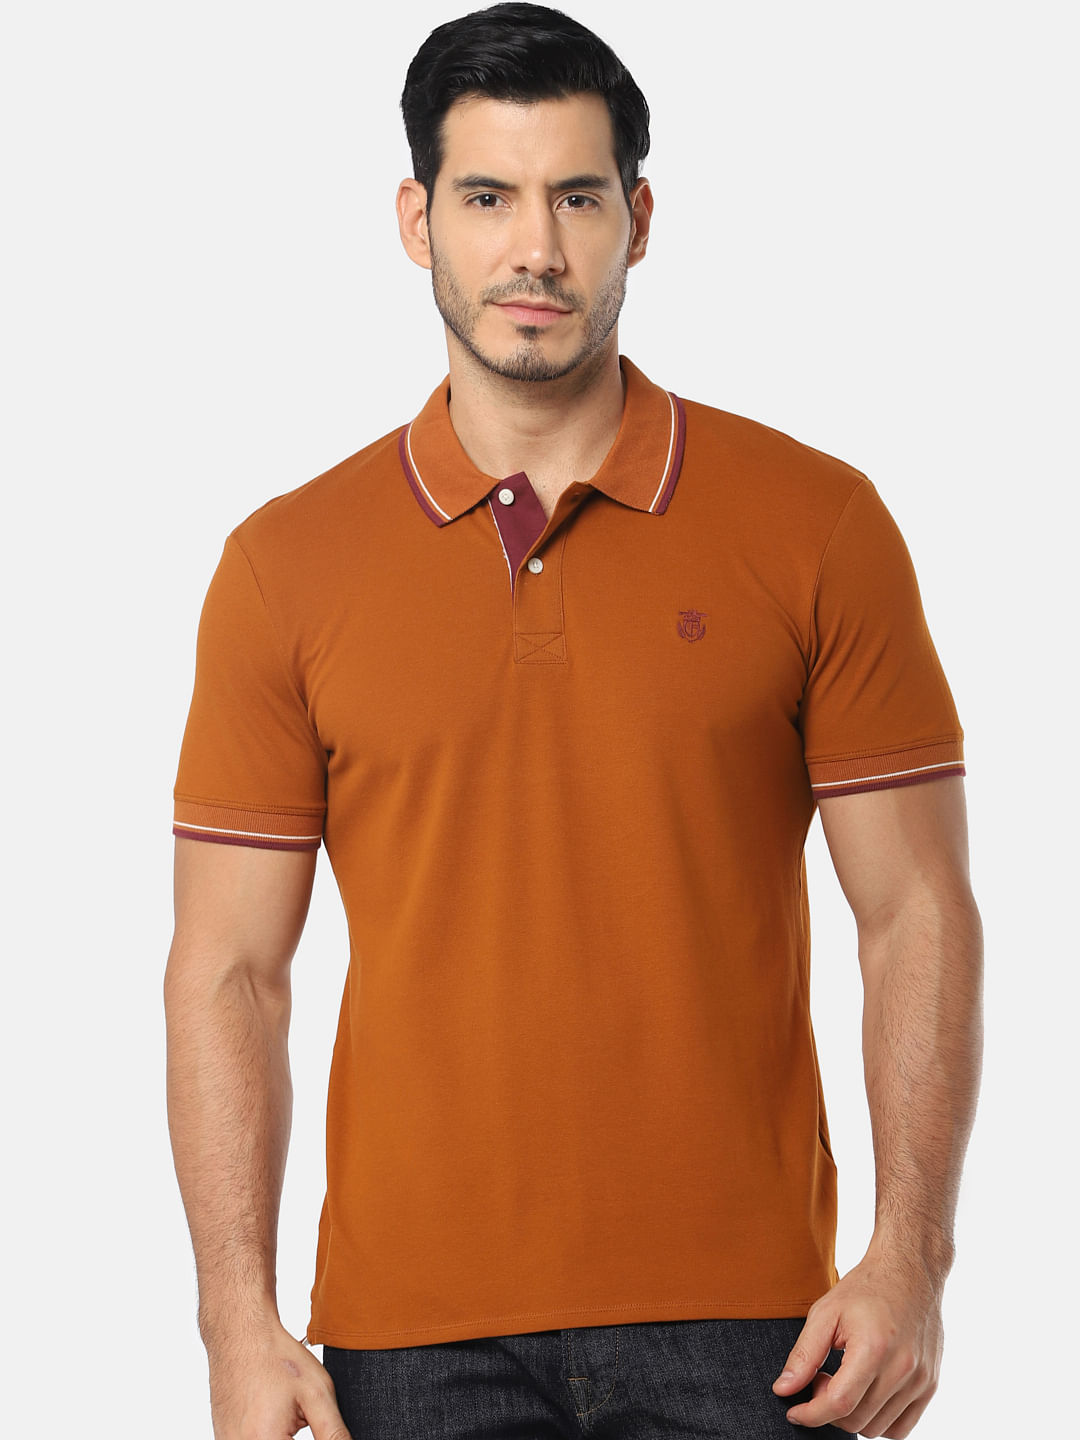 brown polo t shirt